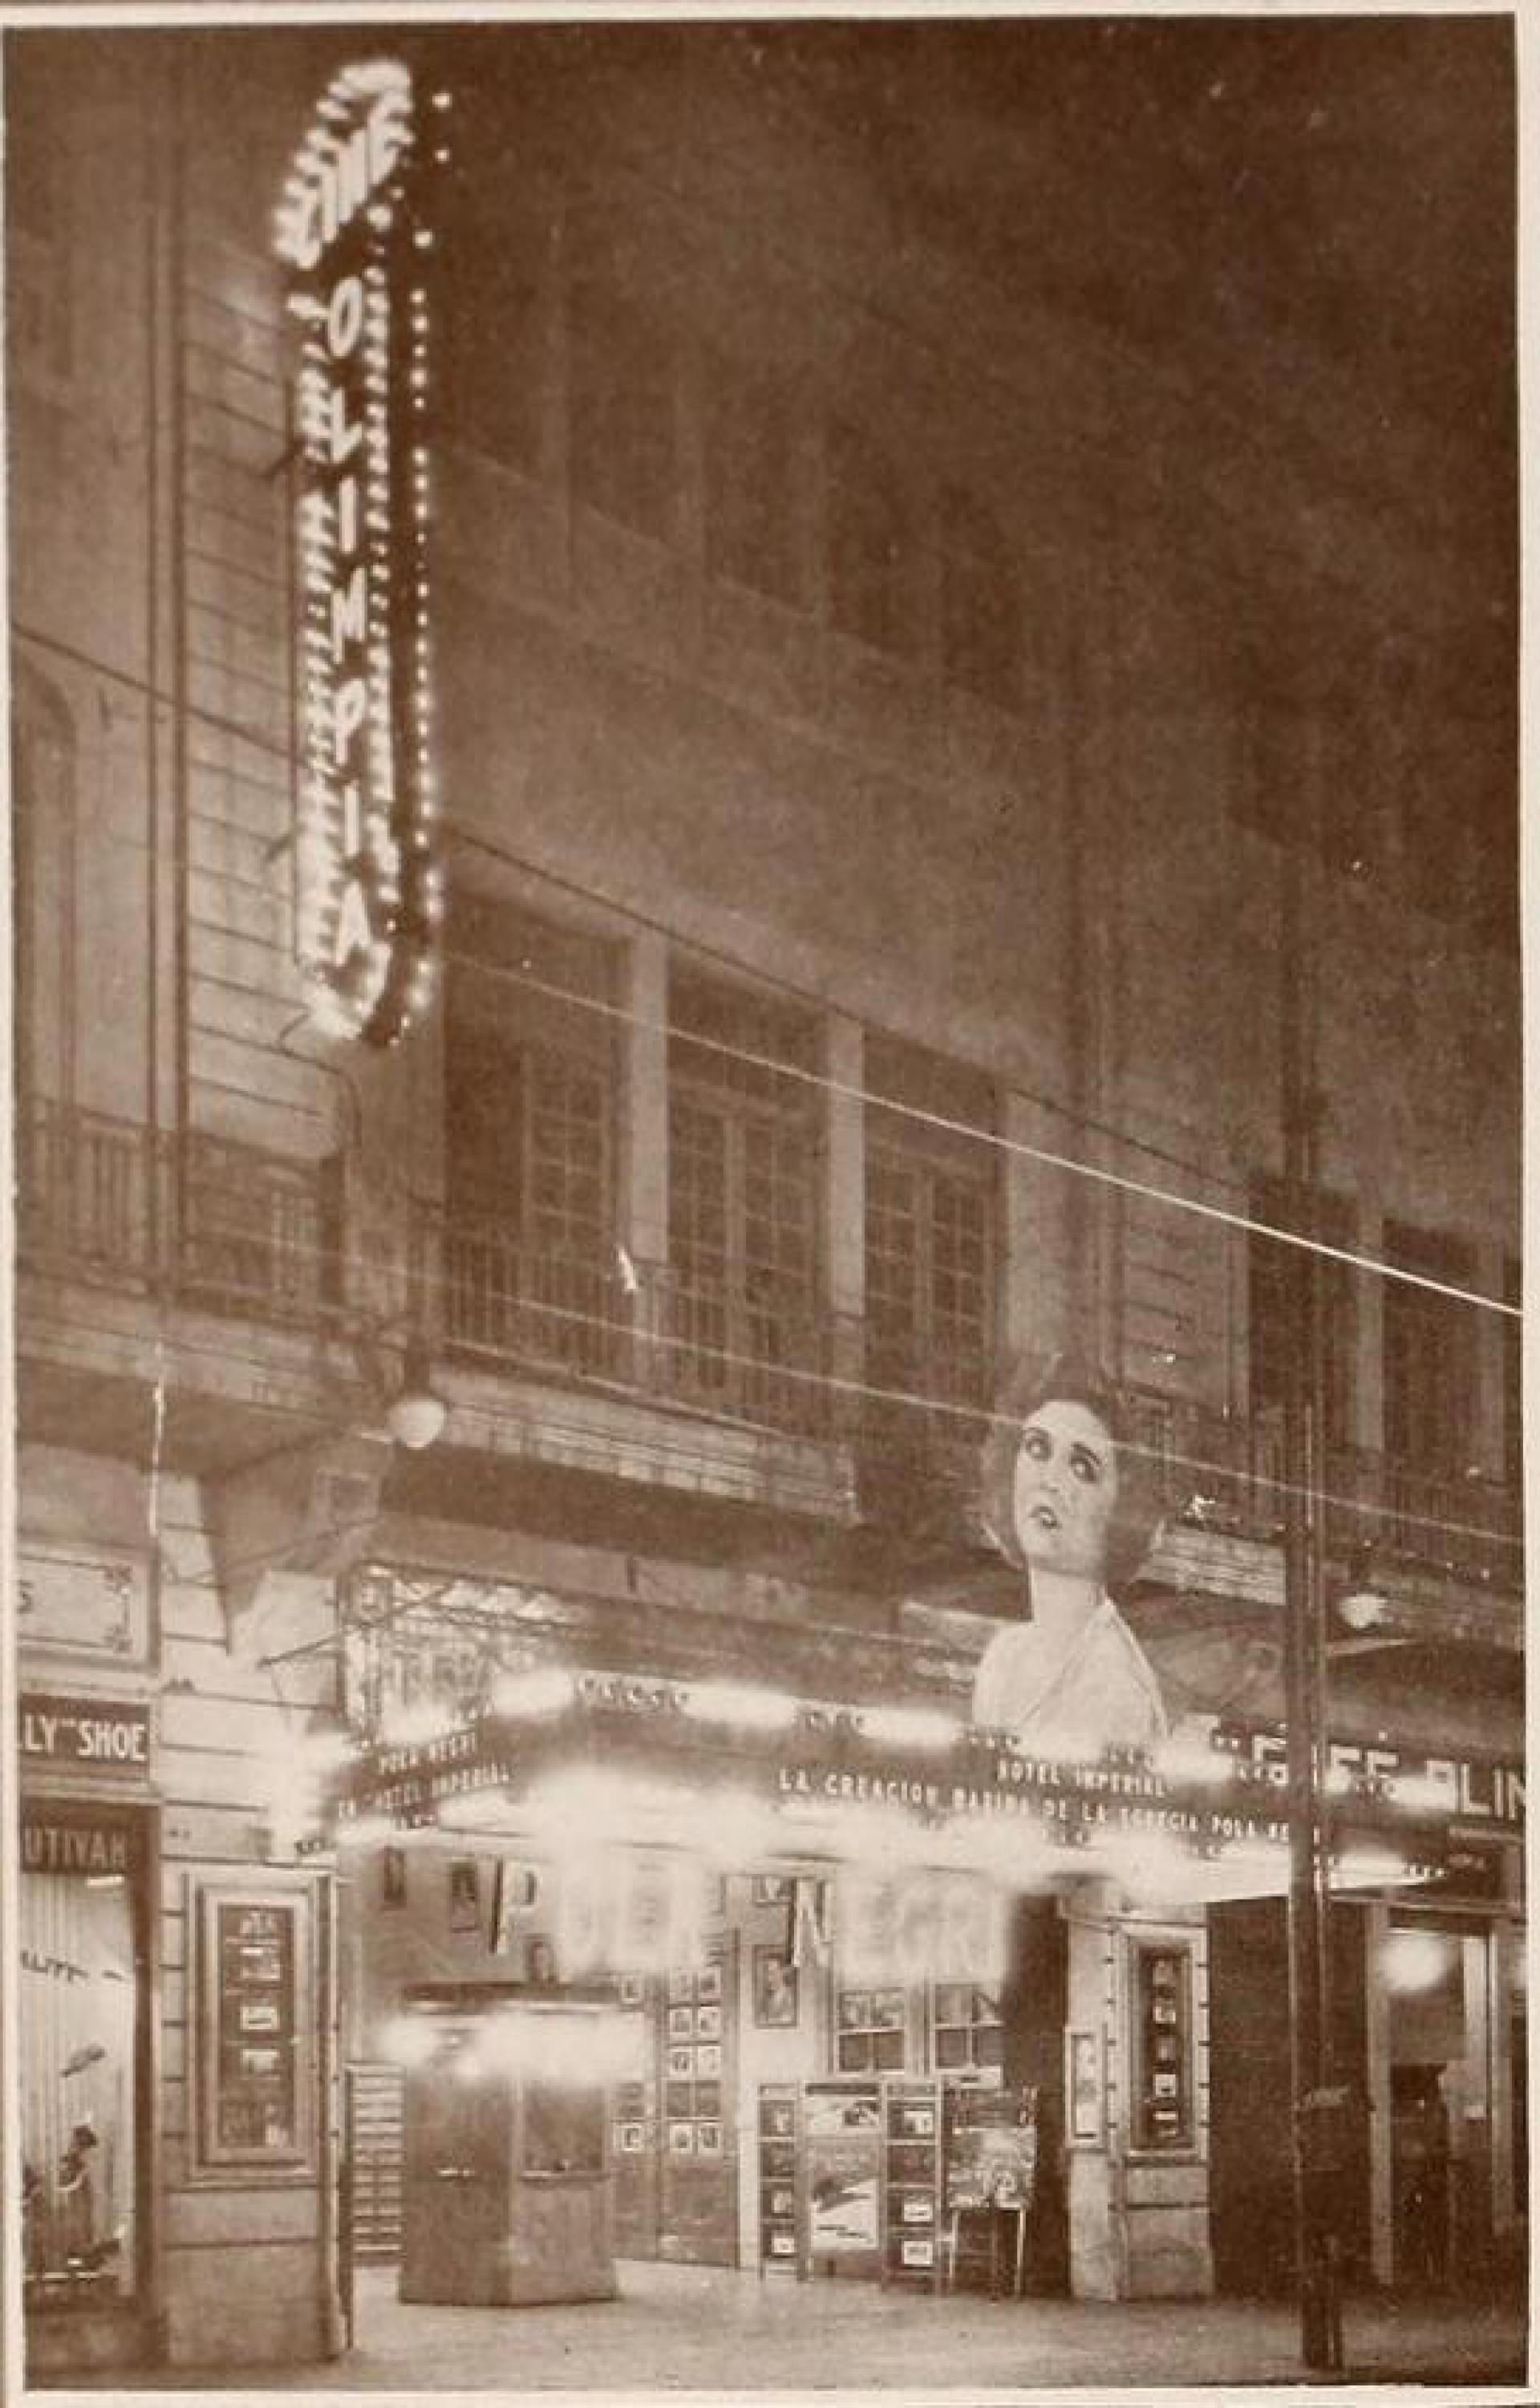 Cine Olimpia from 1927. | Photo via Mensajero Paramount